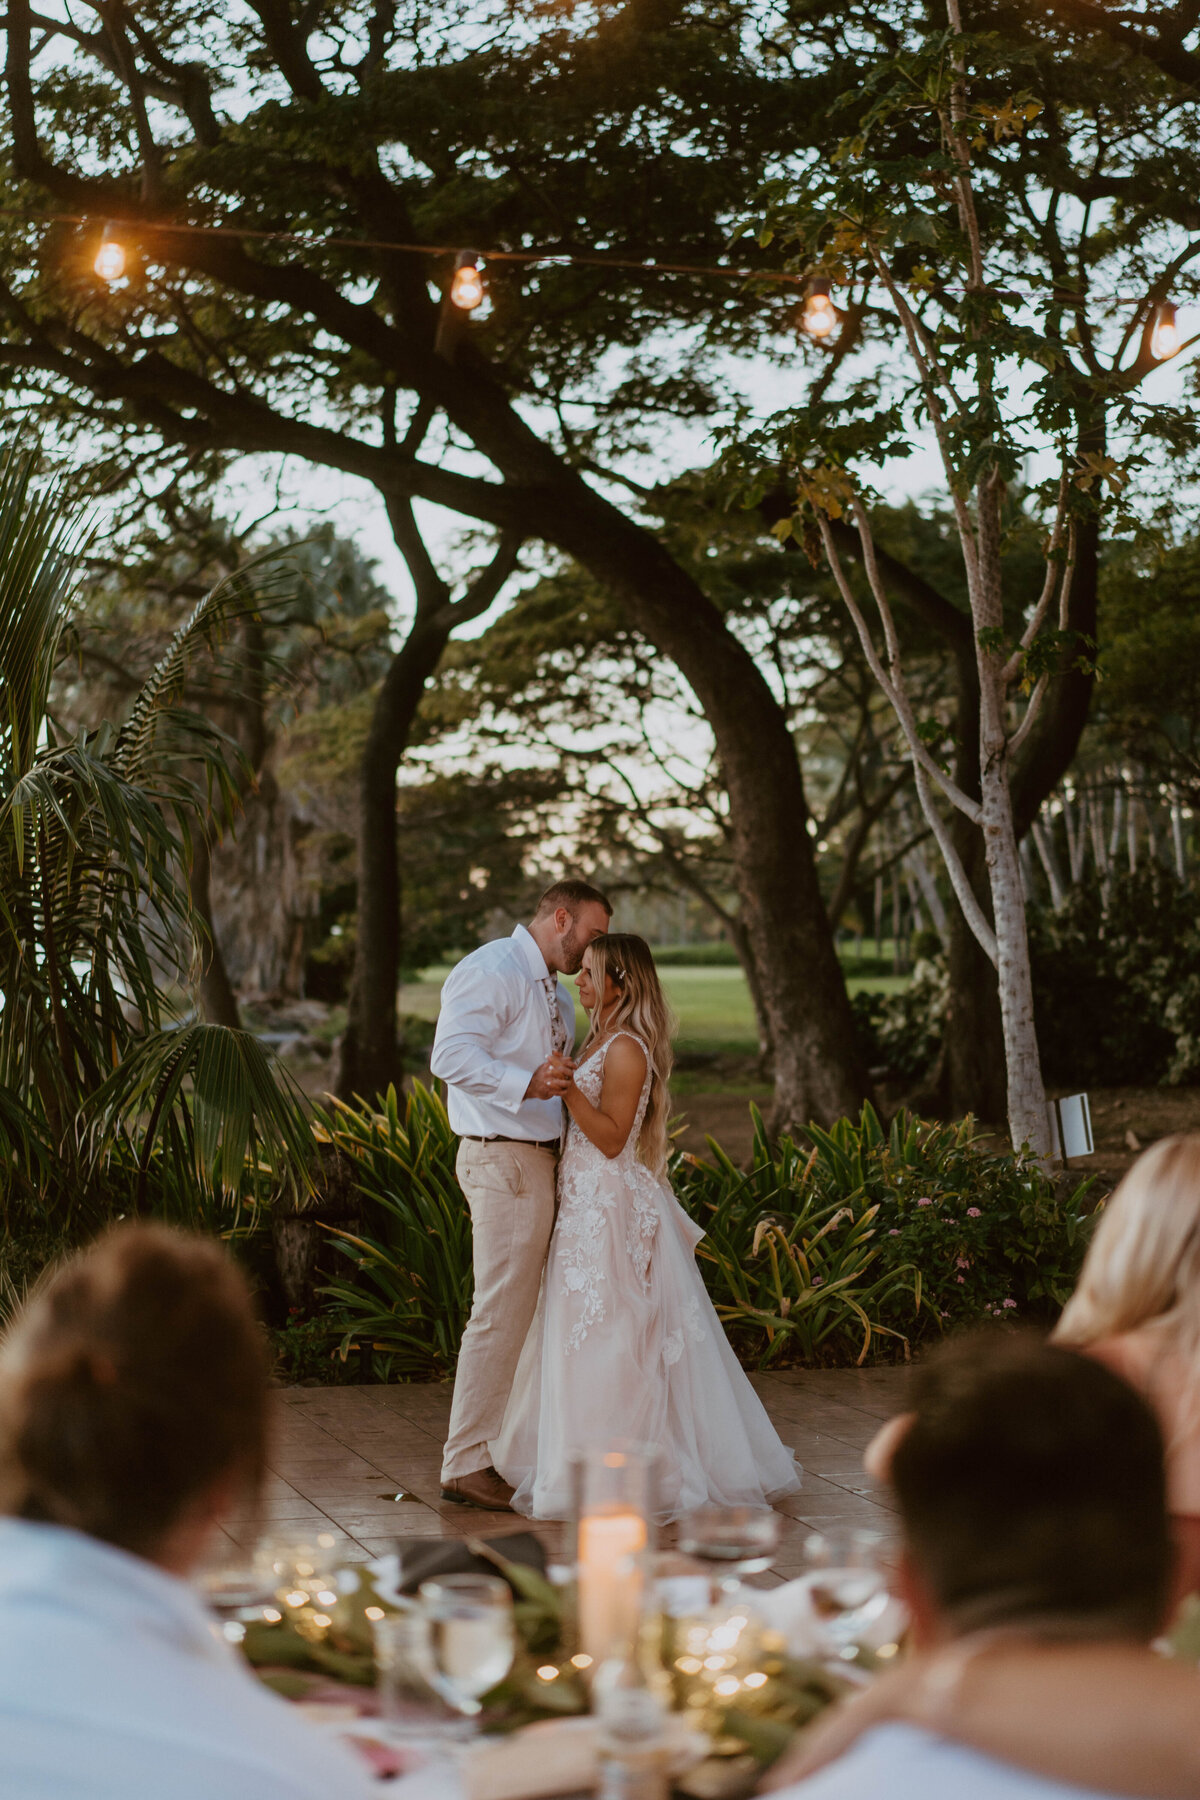 Olowalu Plantation House is a beautiful ocean-side wedding venue in Maui, Hawaii.